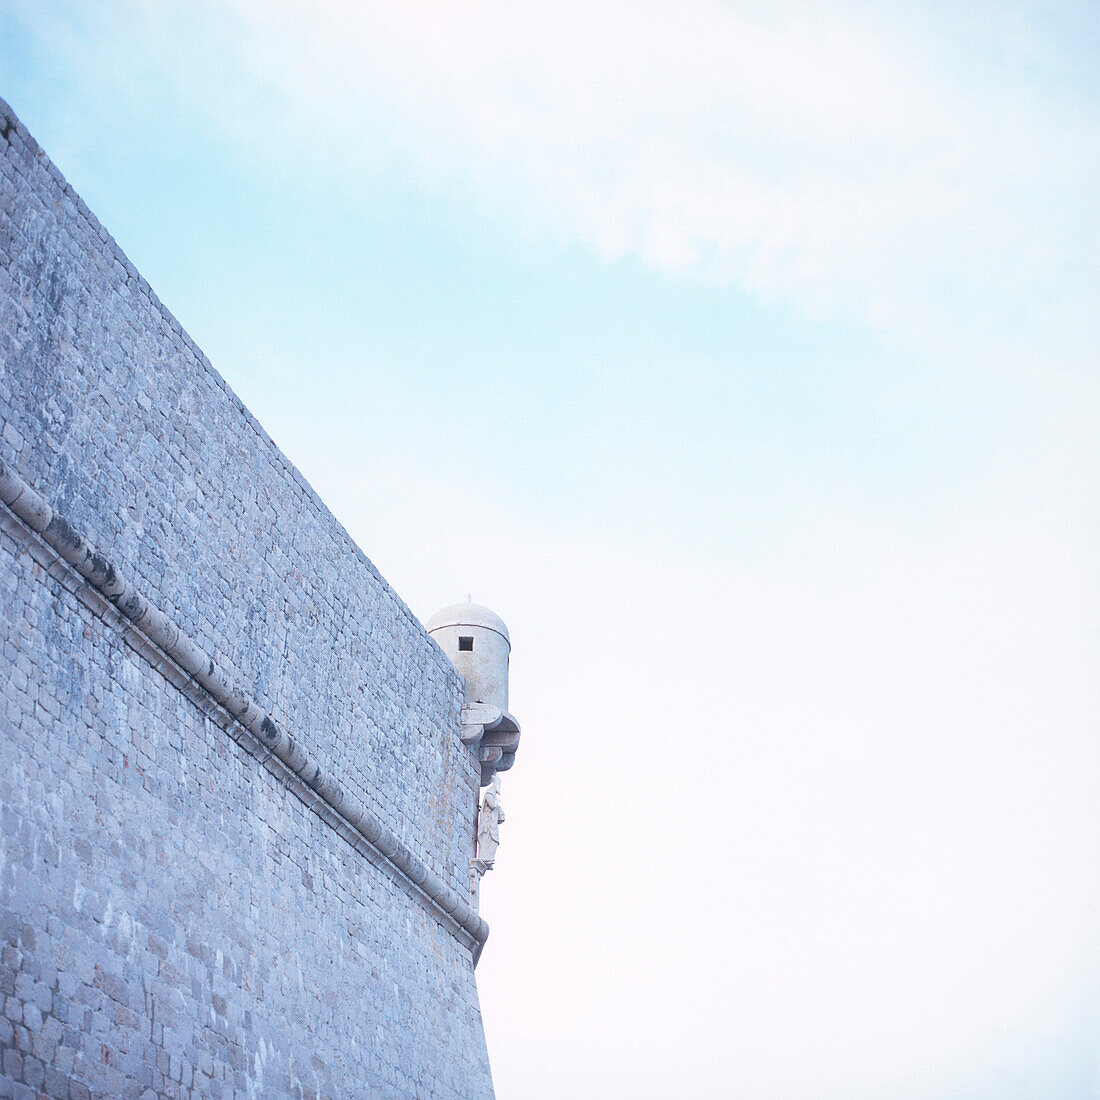 Part of the city wall with patron saint St. Blaise, Dubrovnik, Dalmatia, Croatia